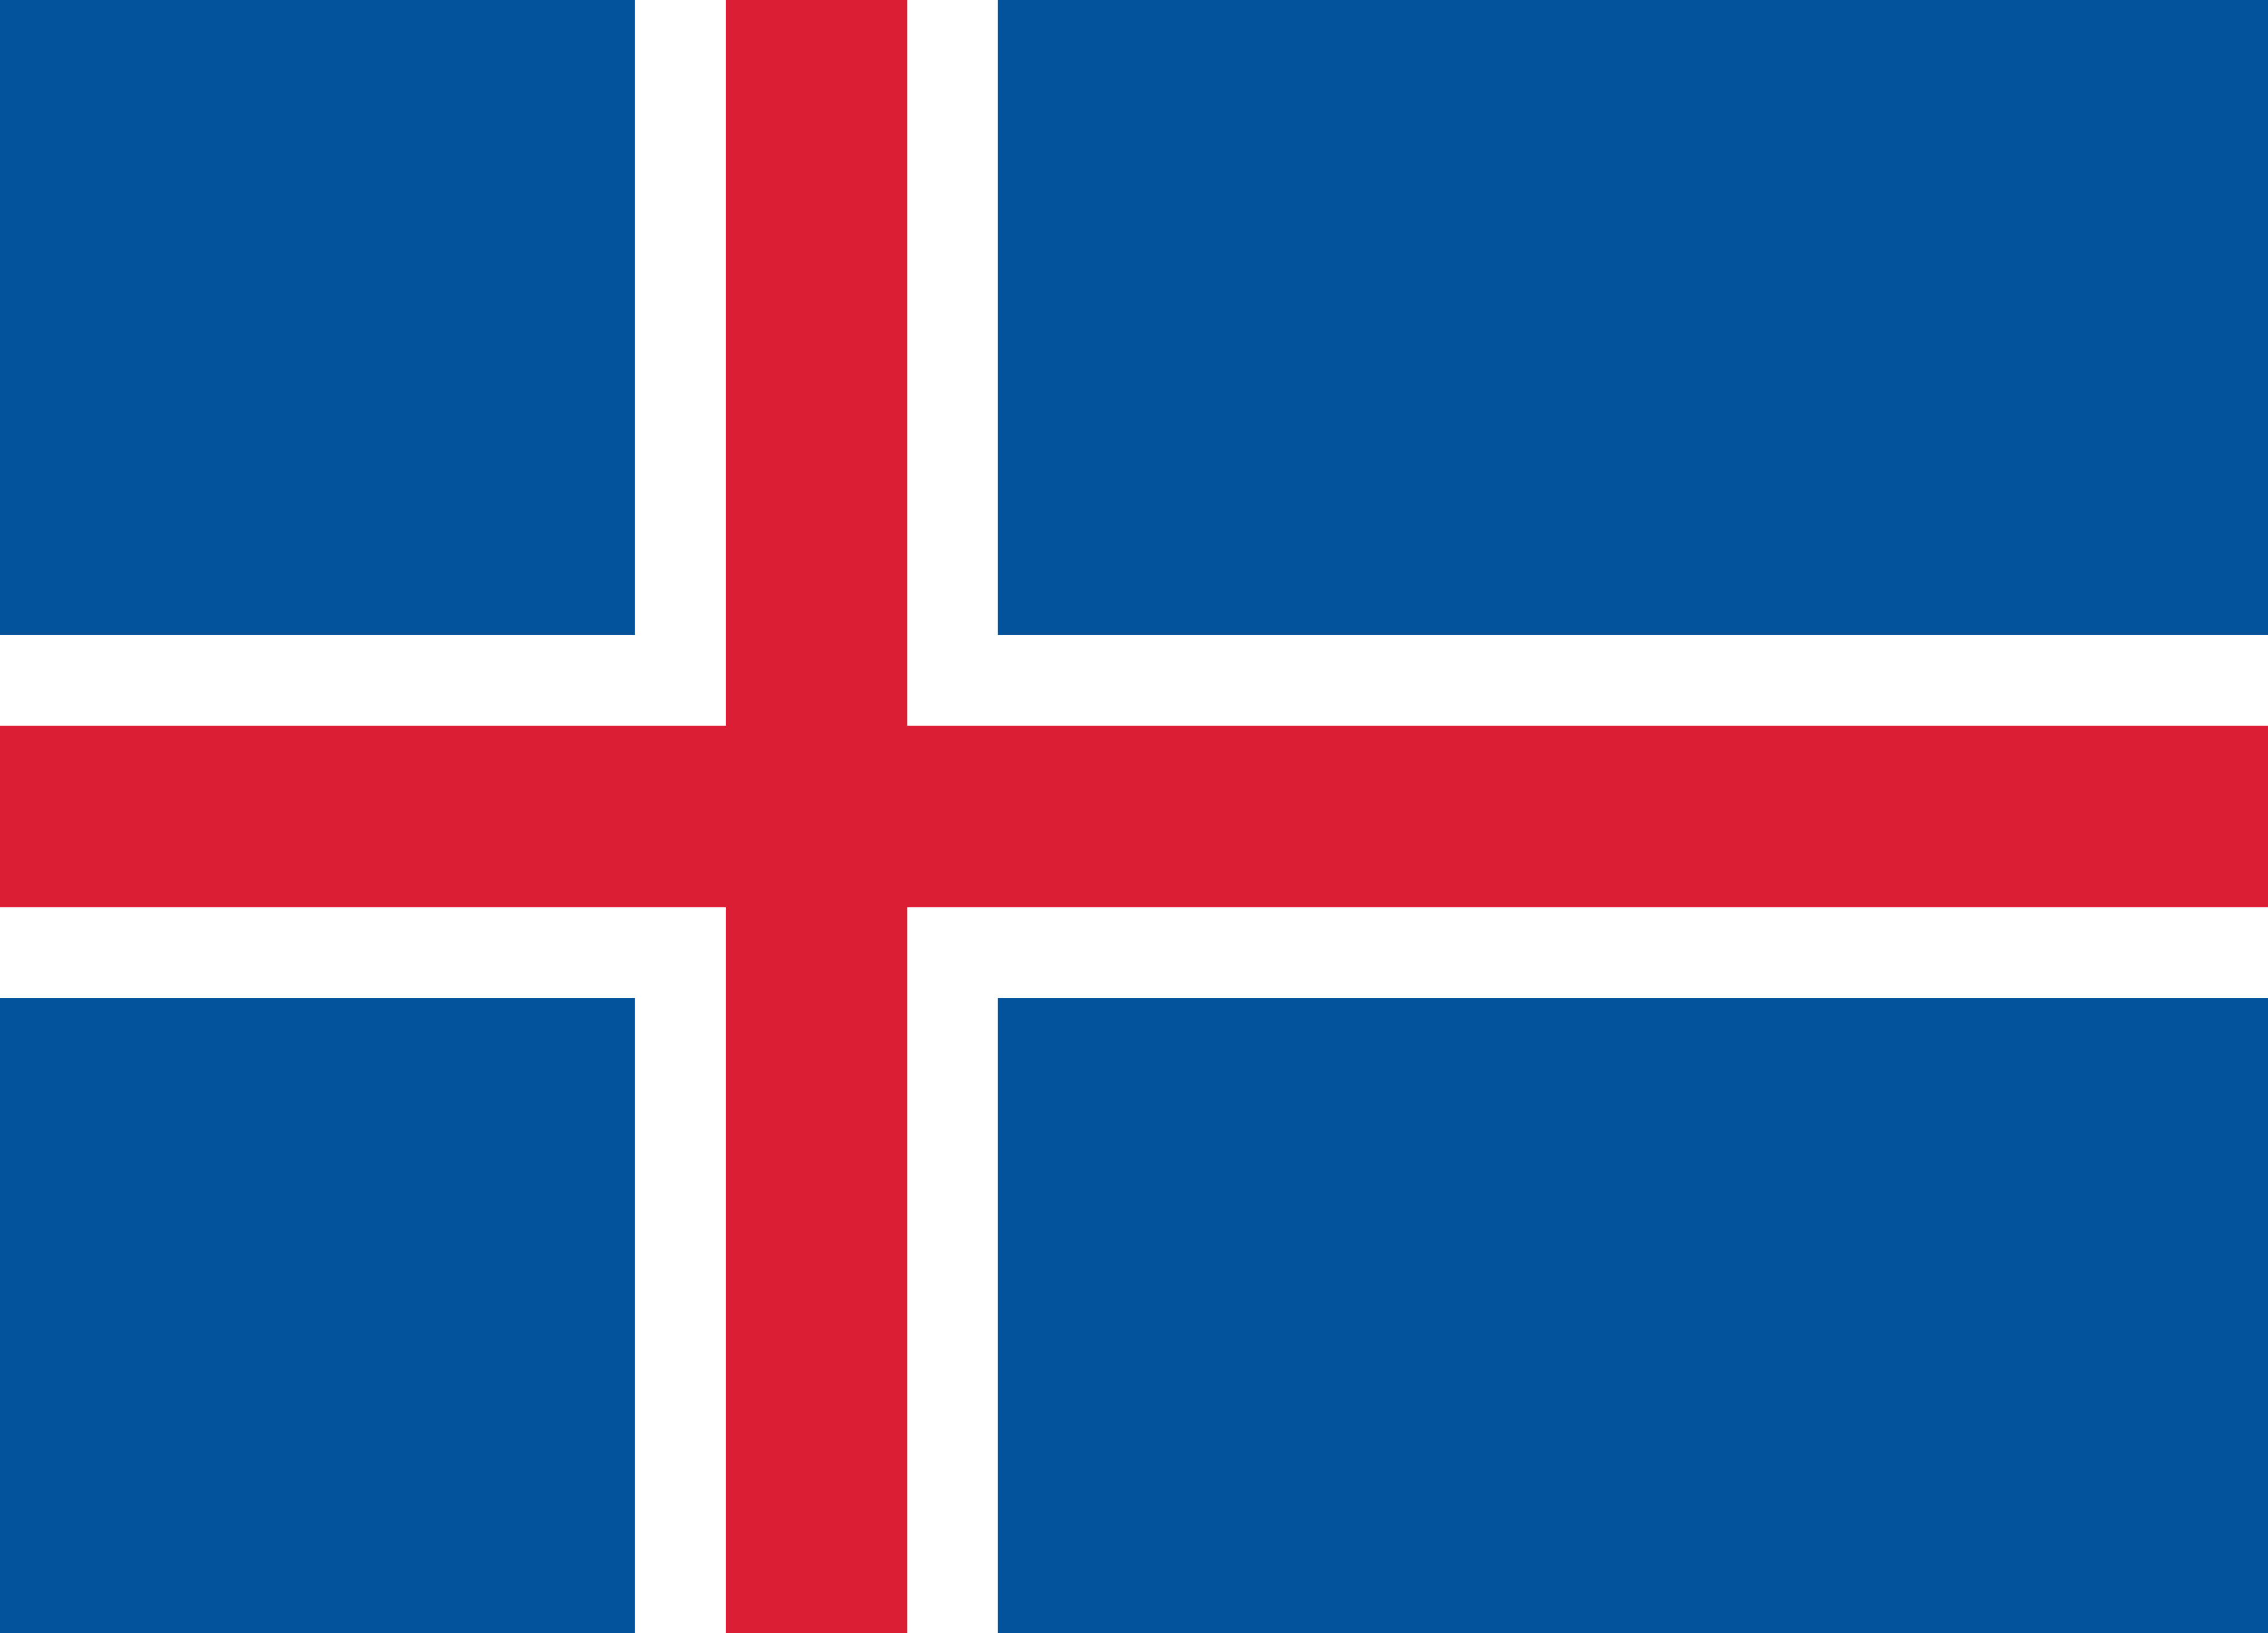 Free Iceland Flag Documents: PDF, DOC, DOCX, HTML & More!